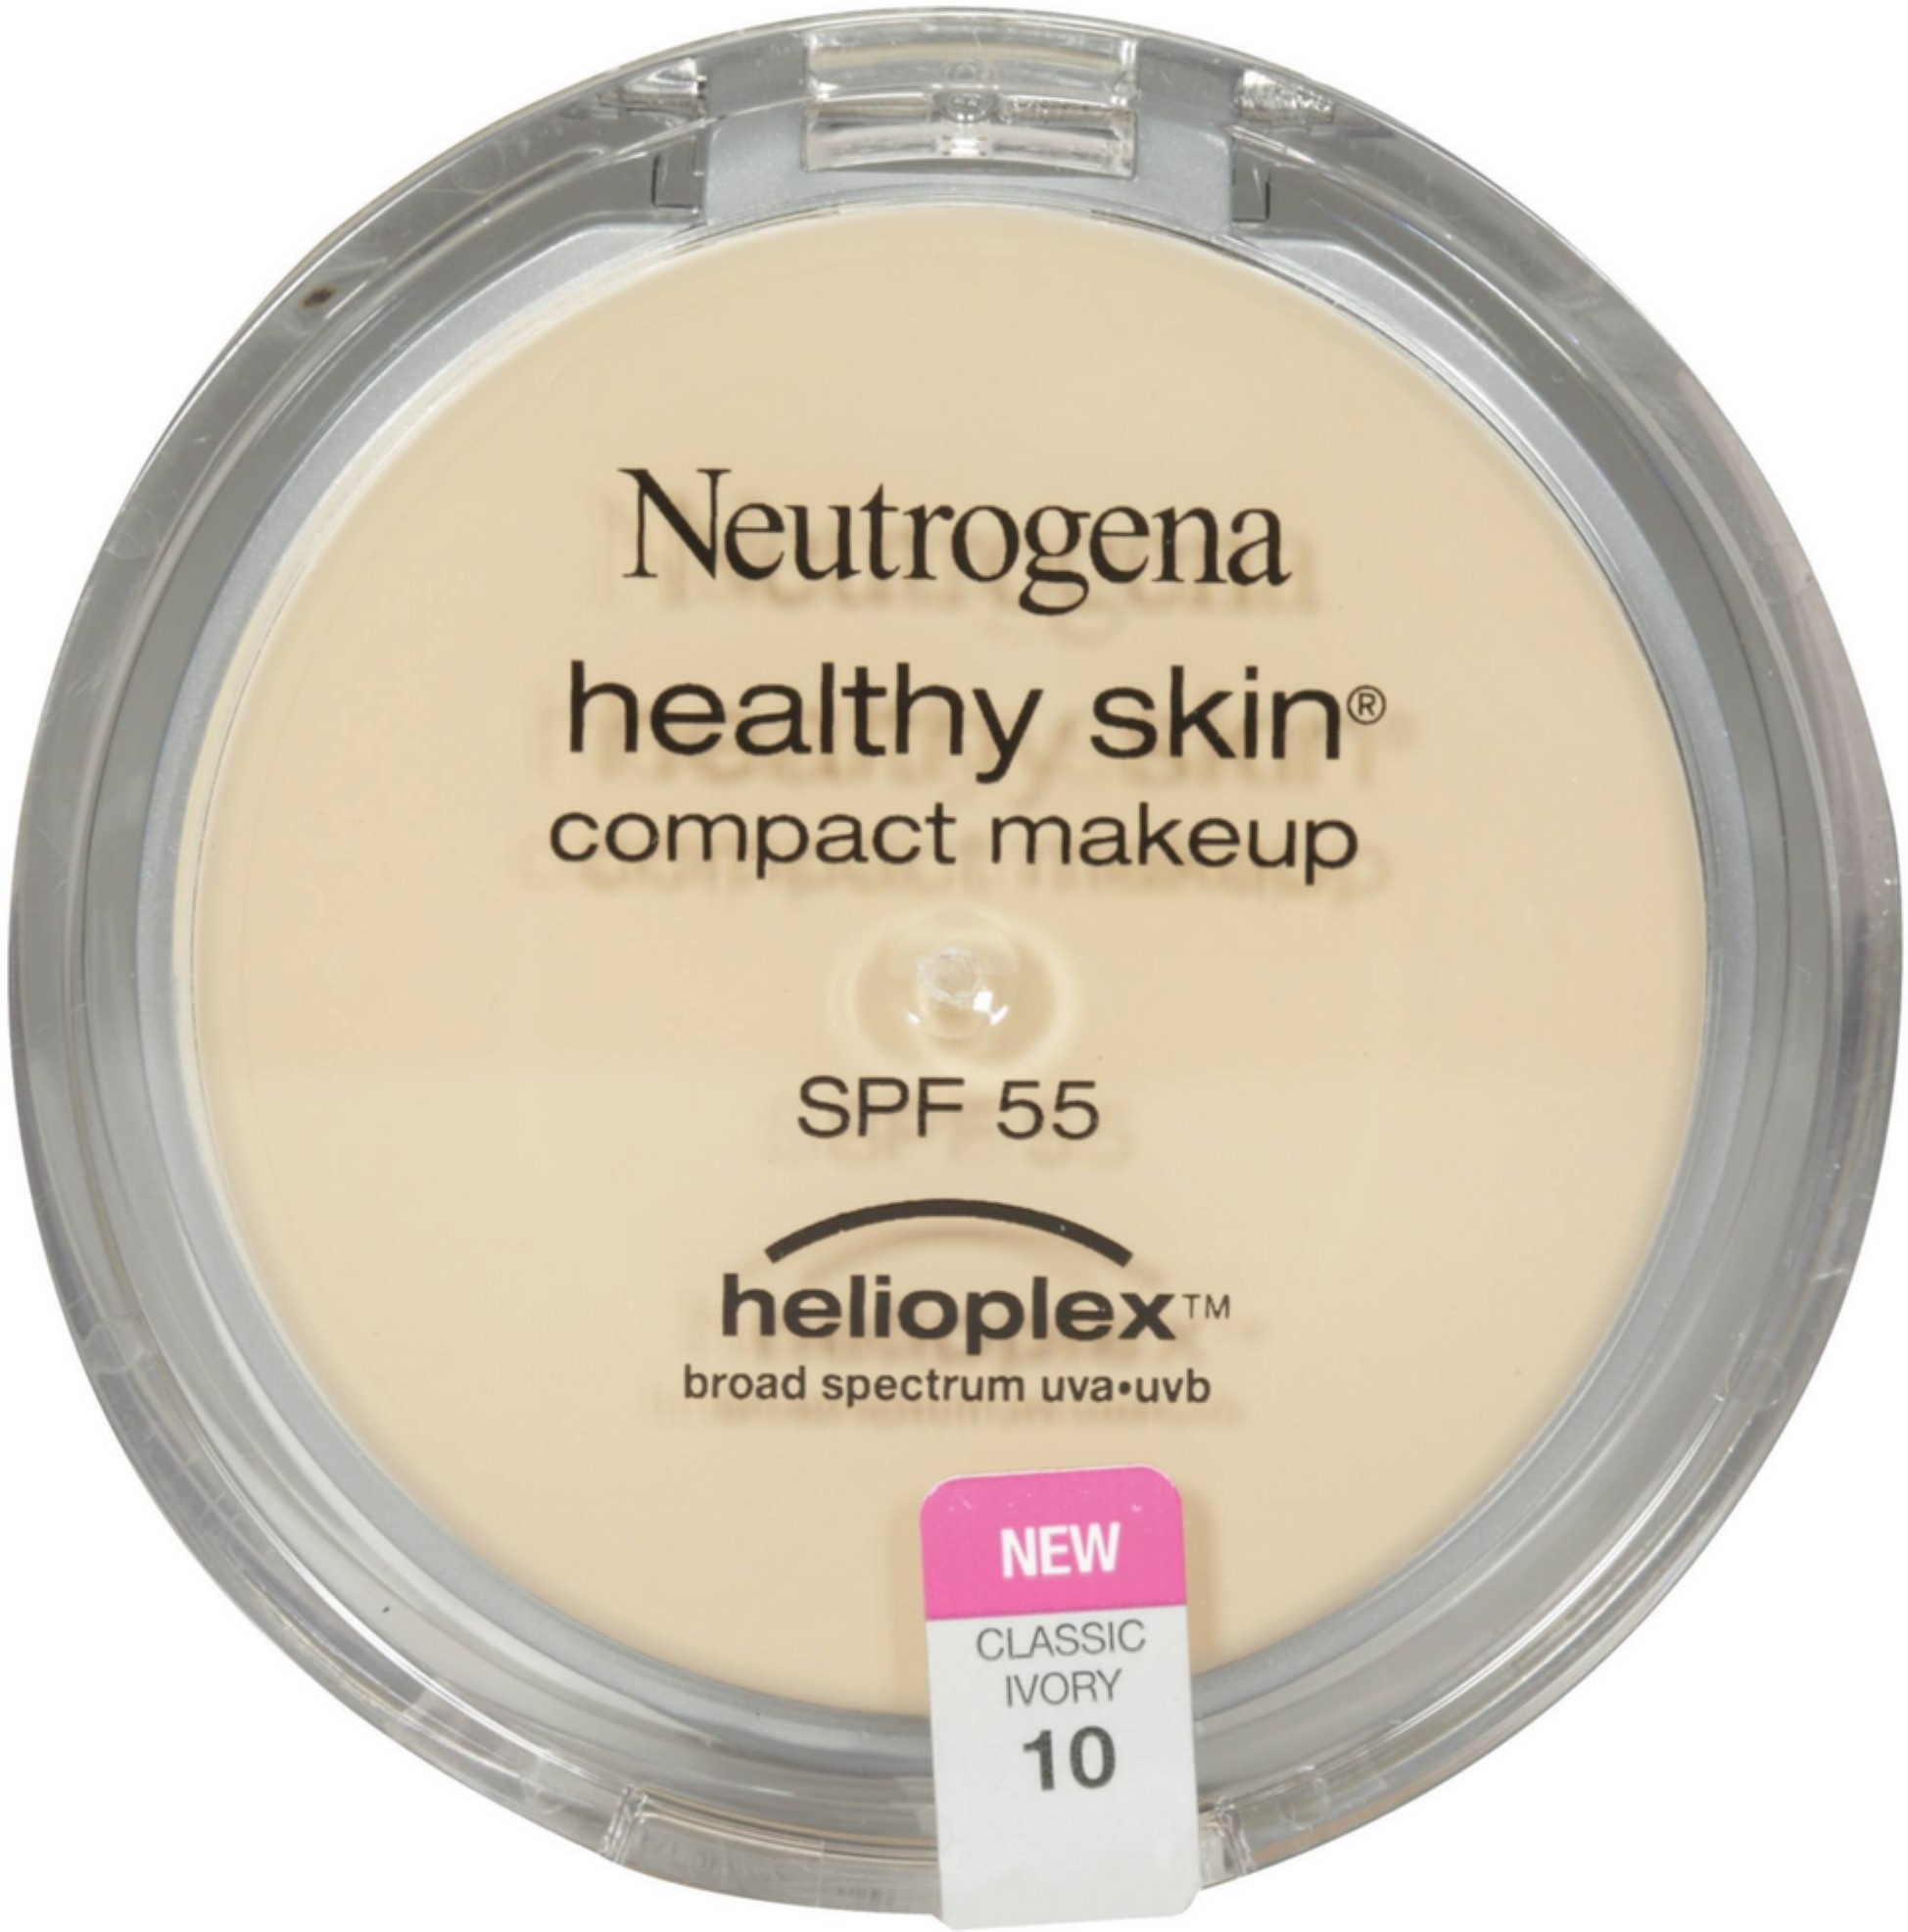 Neutrogena Healthy Skin Maquillaje Compacto SPF 55 con Helioplex, Clásico de Marfil [10] 0.35 oz (Pack de 3)-191565191514-0